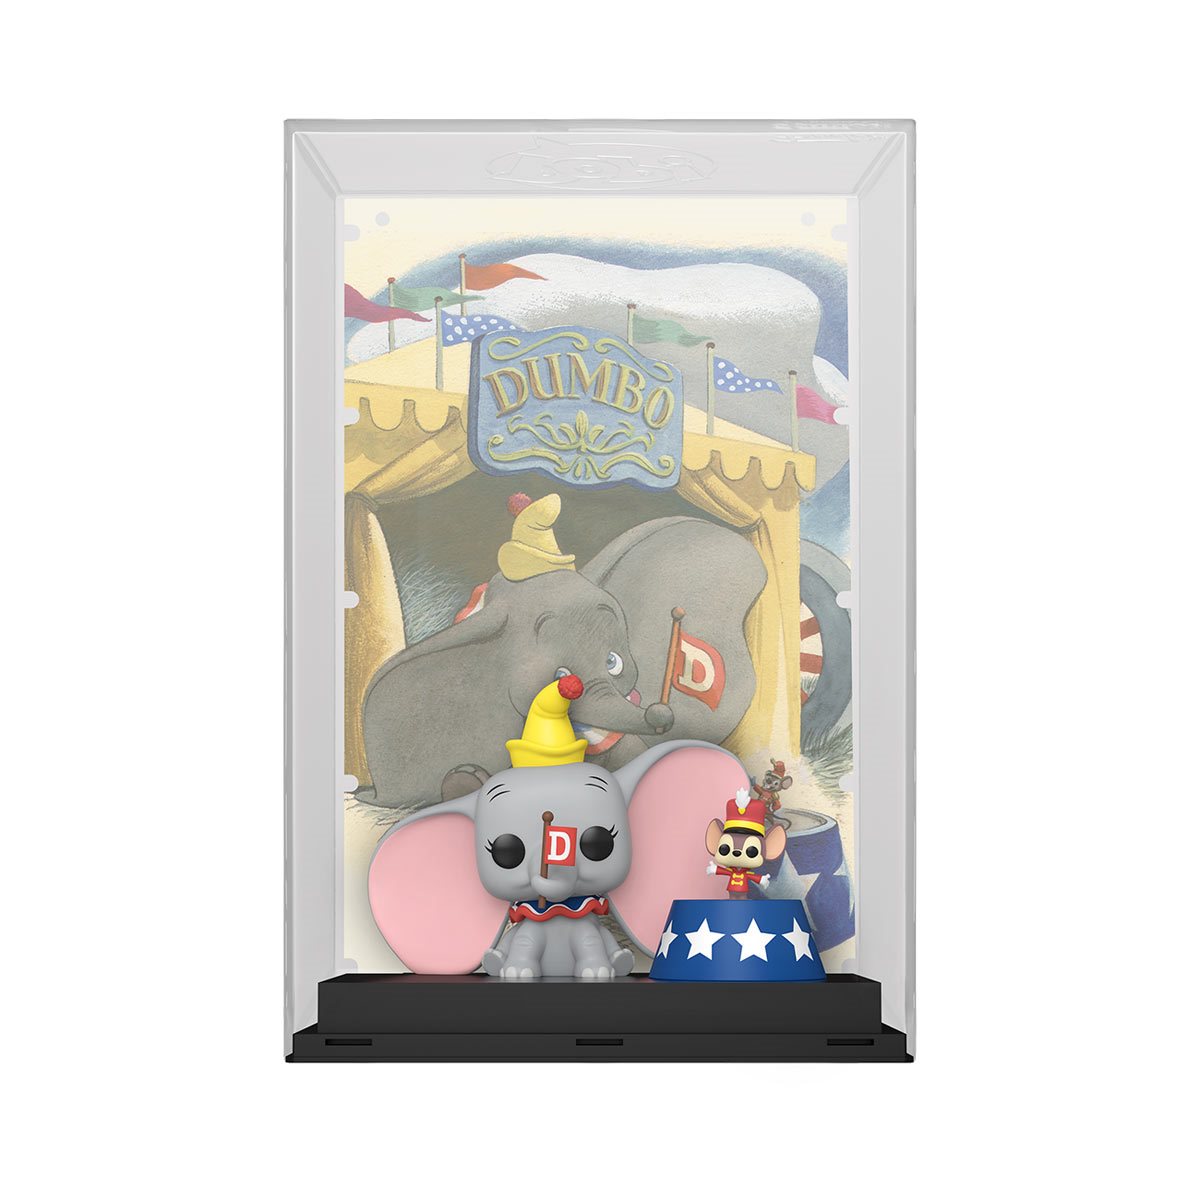 PRESALE | Funko POP! Movie Poster: Disney - Alice in Wonderland - Dumbo with Timothy #13 Vinyl Figures